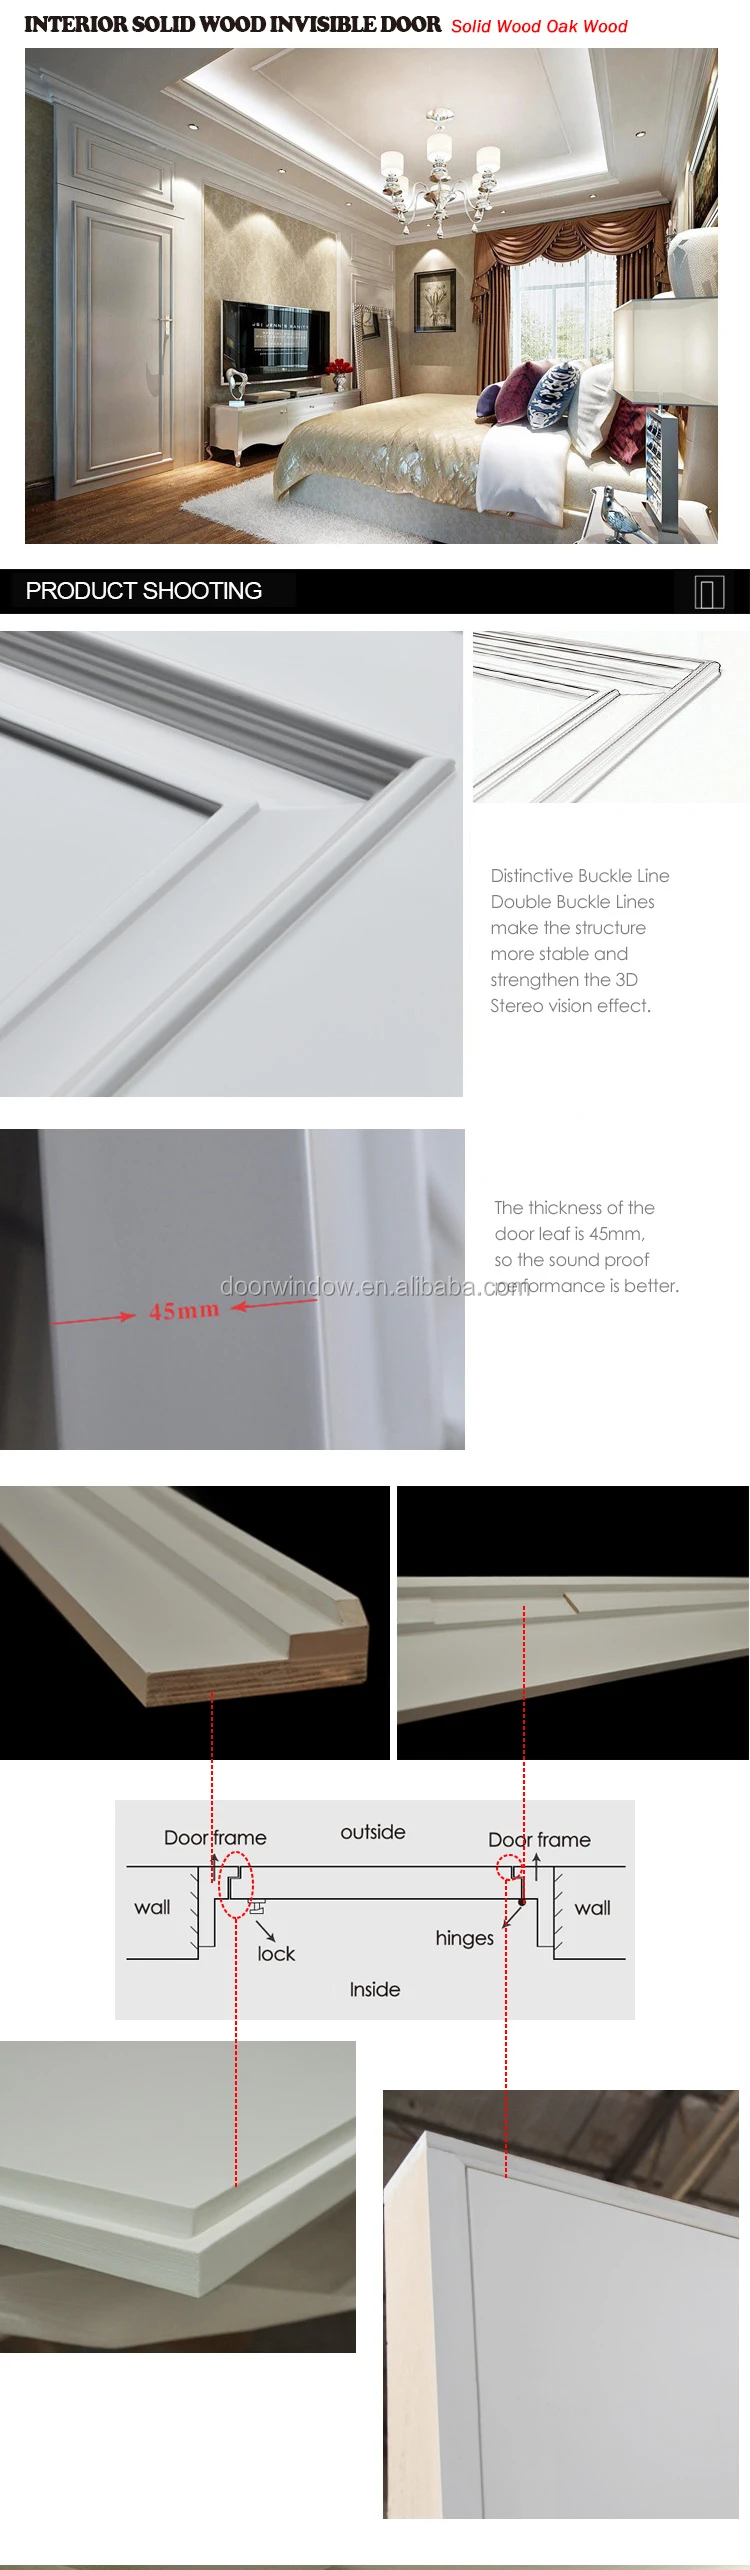 Doorwin hot sale secret flush door with wood carving design invisible white color main door